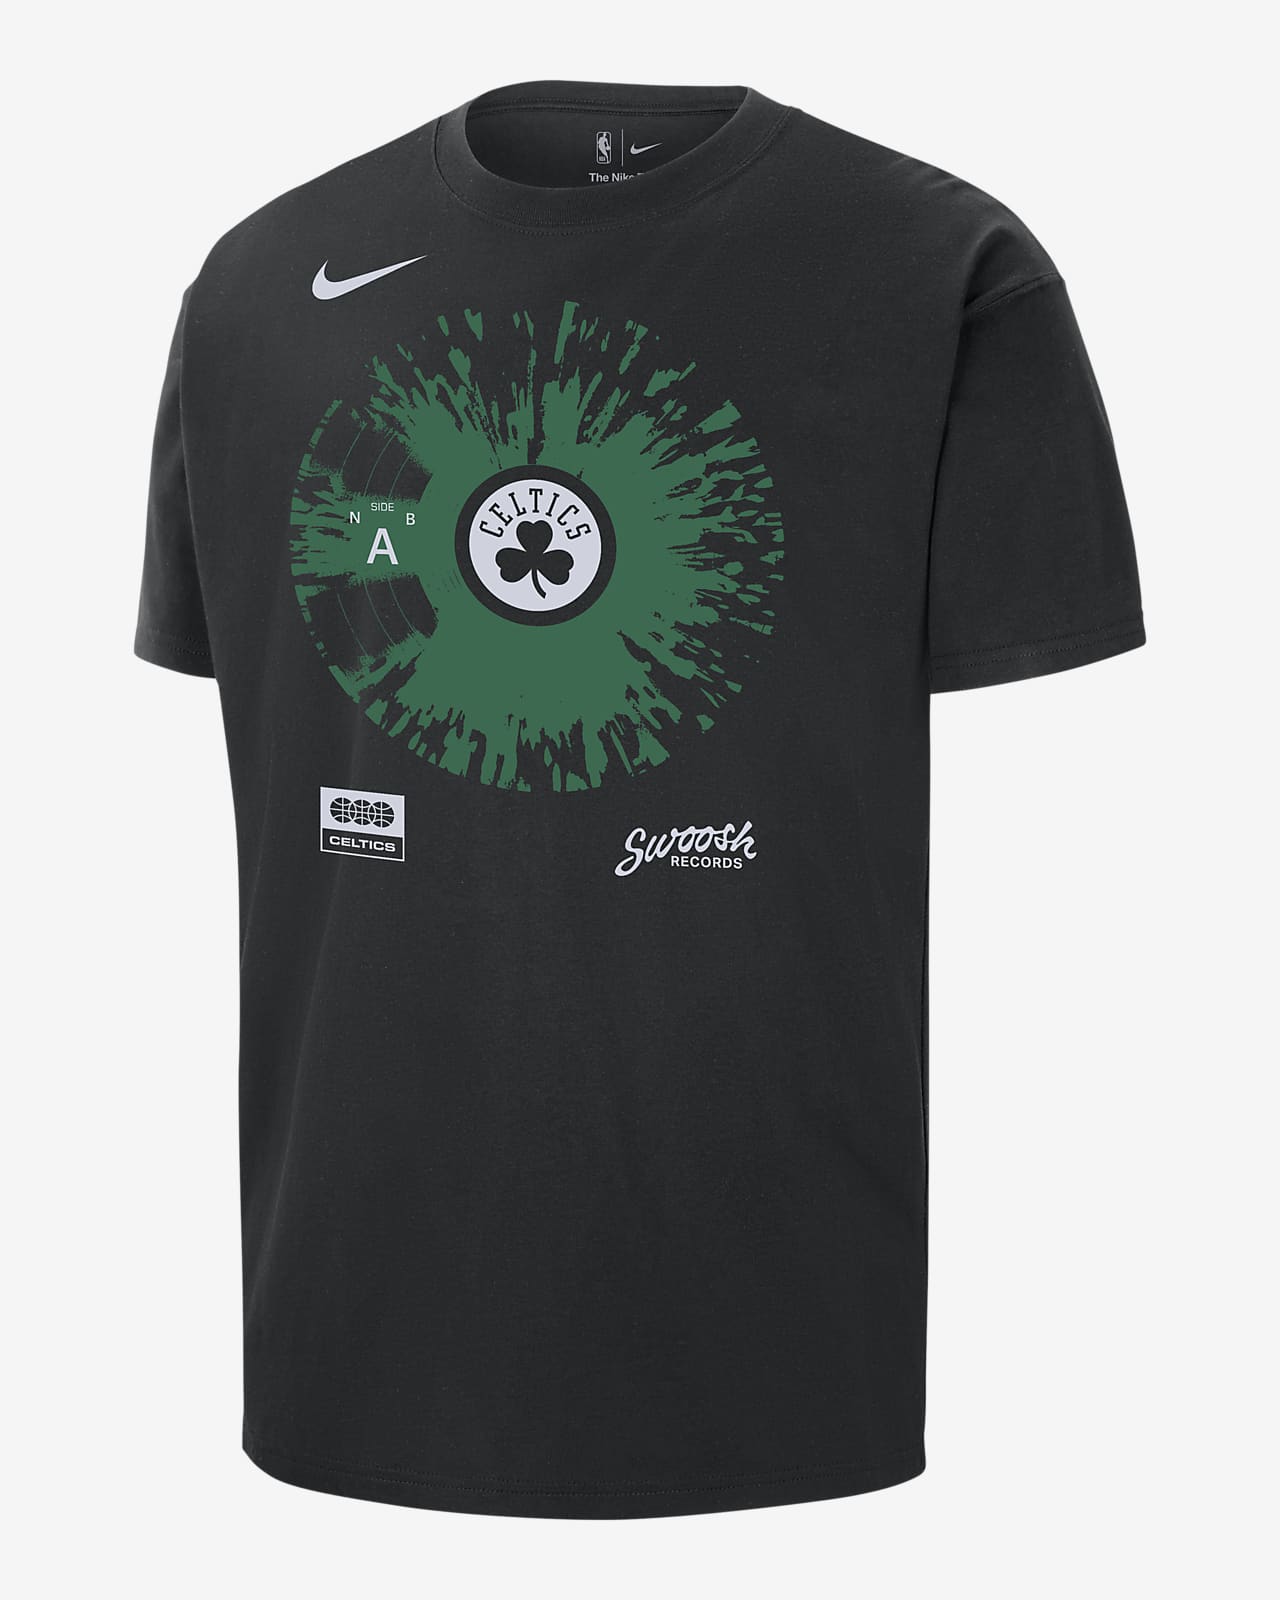 Boston Celtics Nike Mens Apparel & Gifts, Mens Celtics Clothing